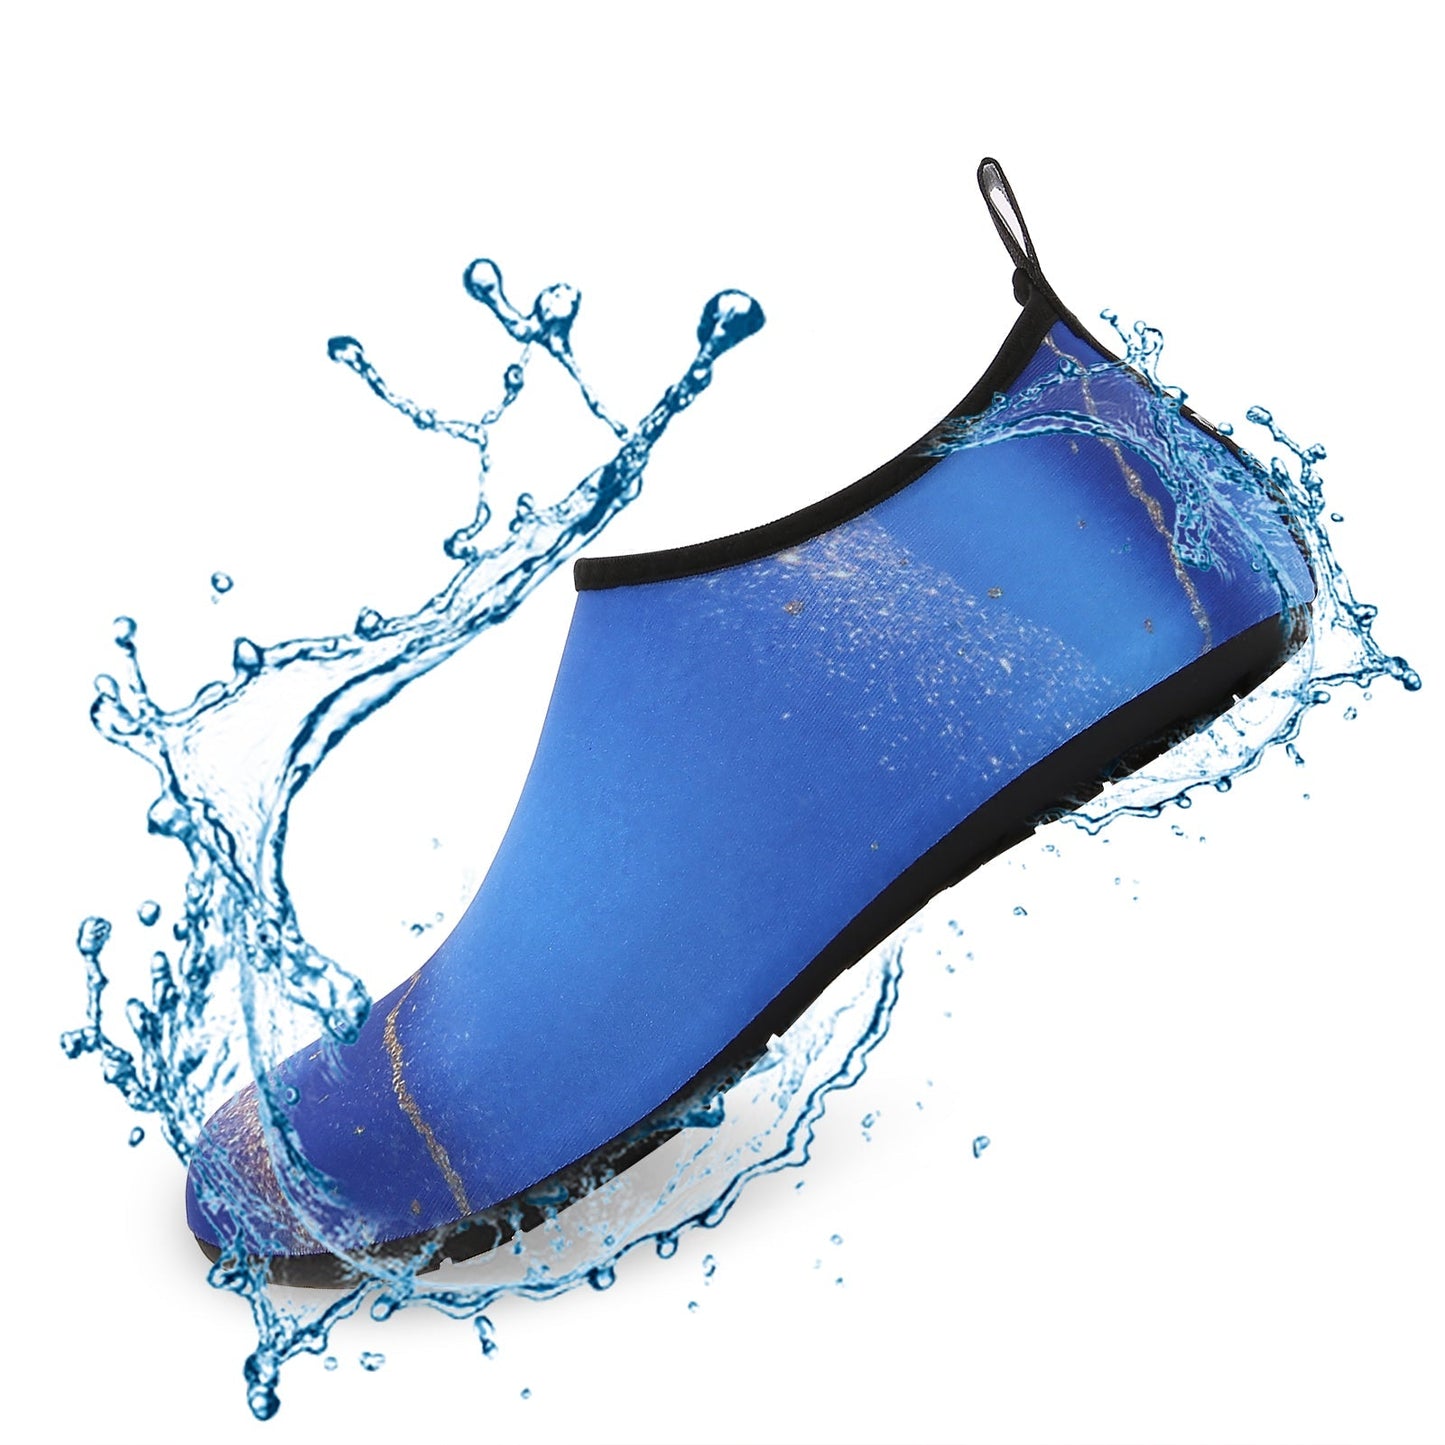 Men and Women a Slip On Barefoot Quick-Dry Beach Aqua Yoga Water Shoes (Glitter/Blue Gold)